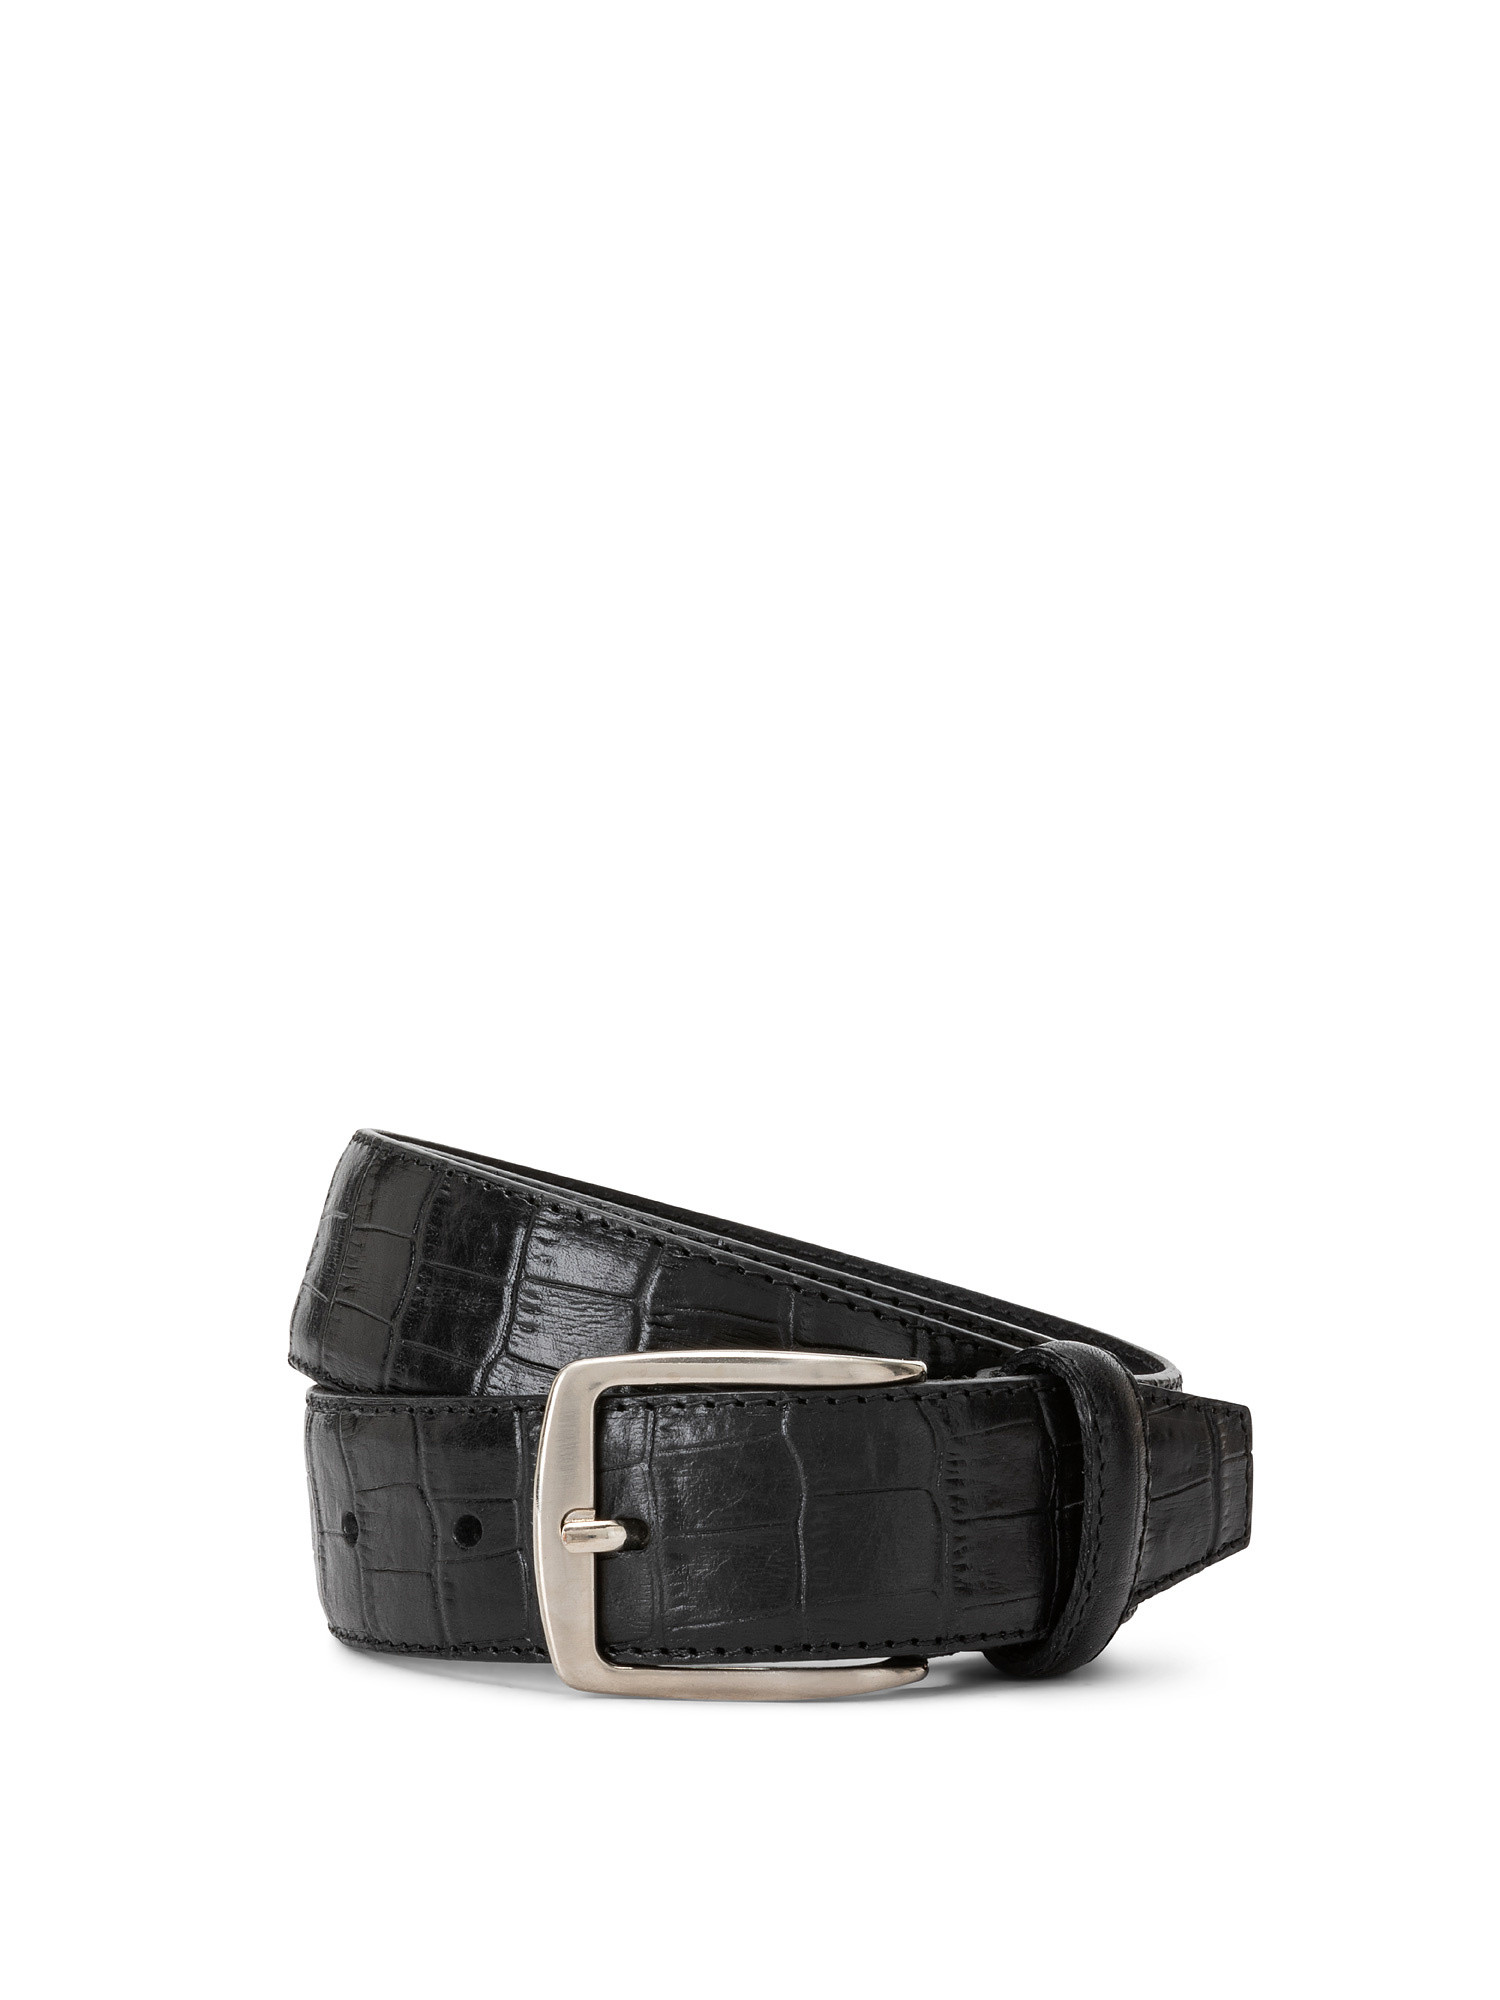 Cintura con stampa coccodrillo, Nero, large image number 0